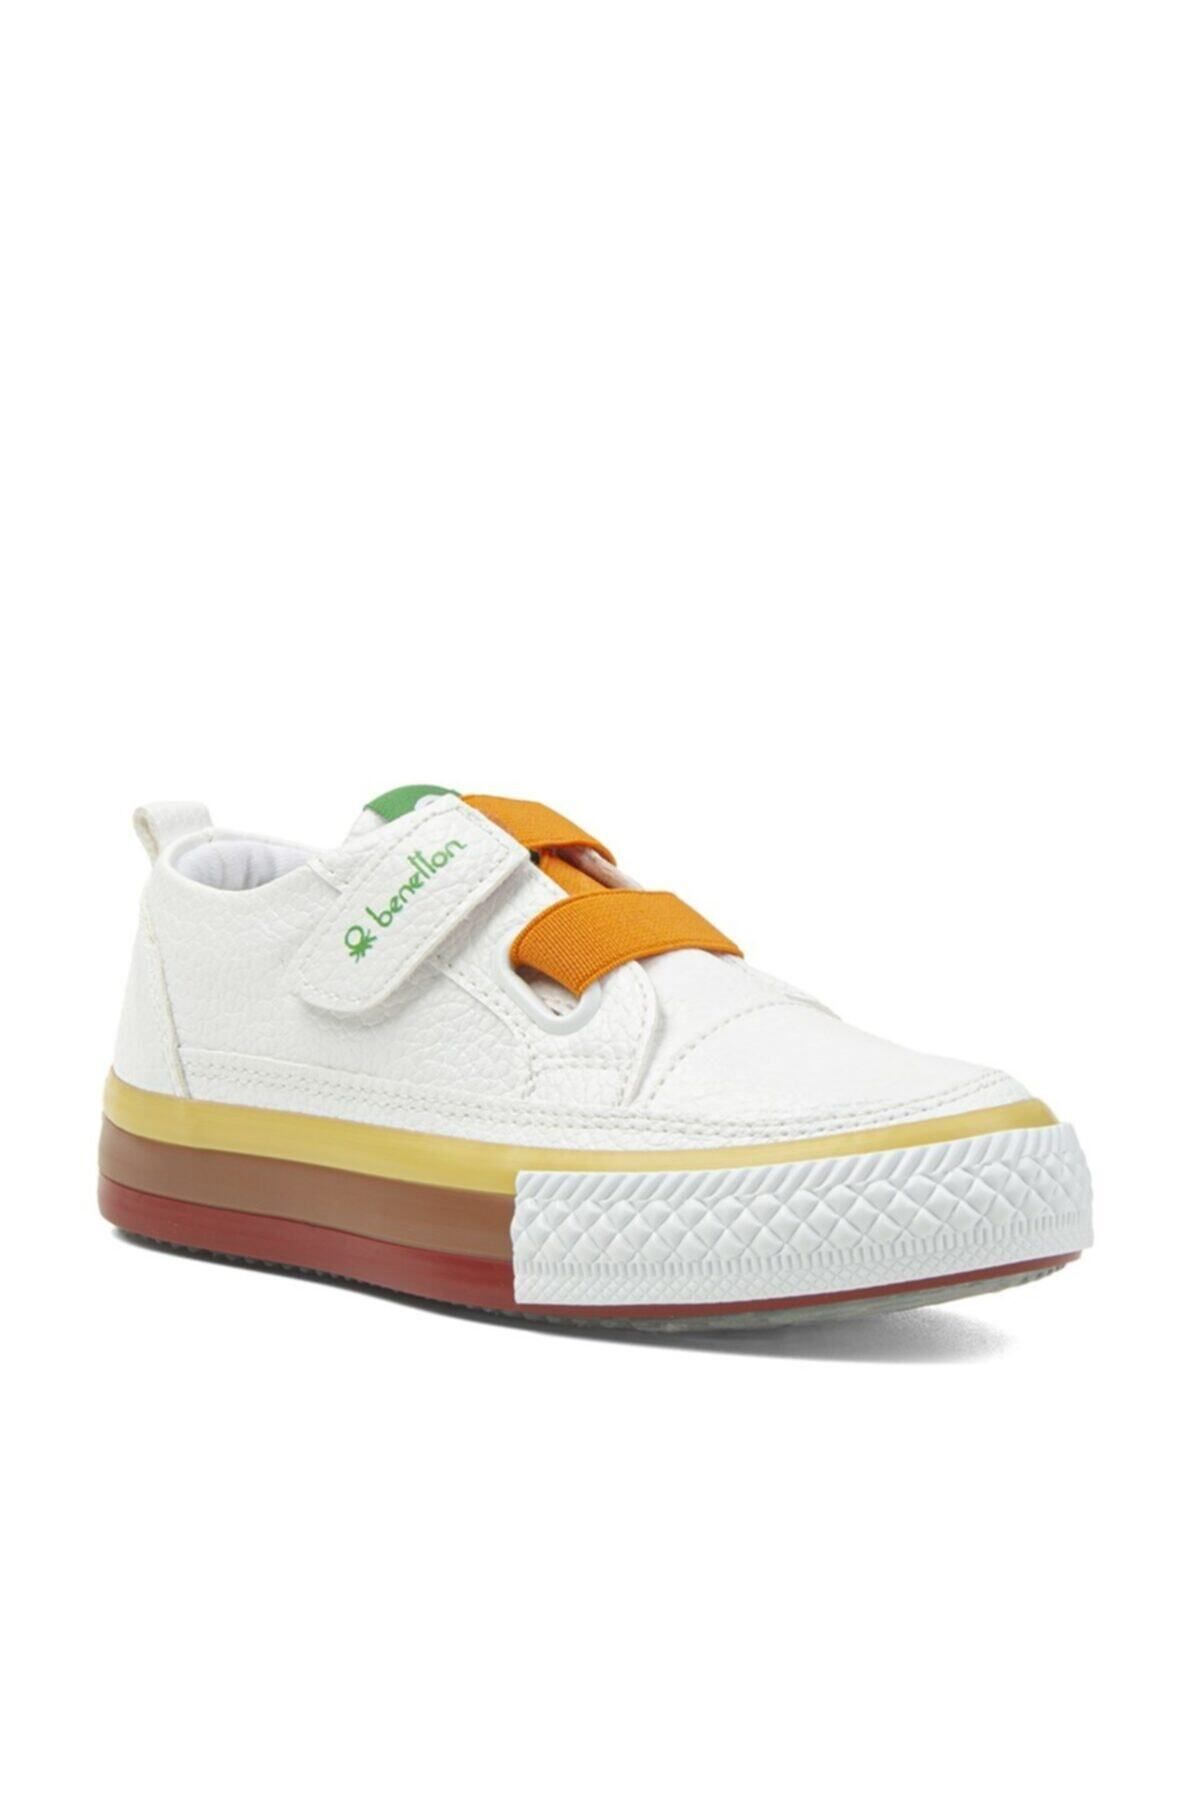 Benetton ® | BN-30445 - 3394 سفید کفش ورزشی بچه گانه